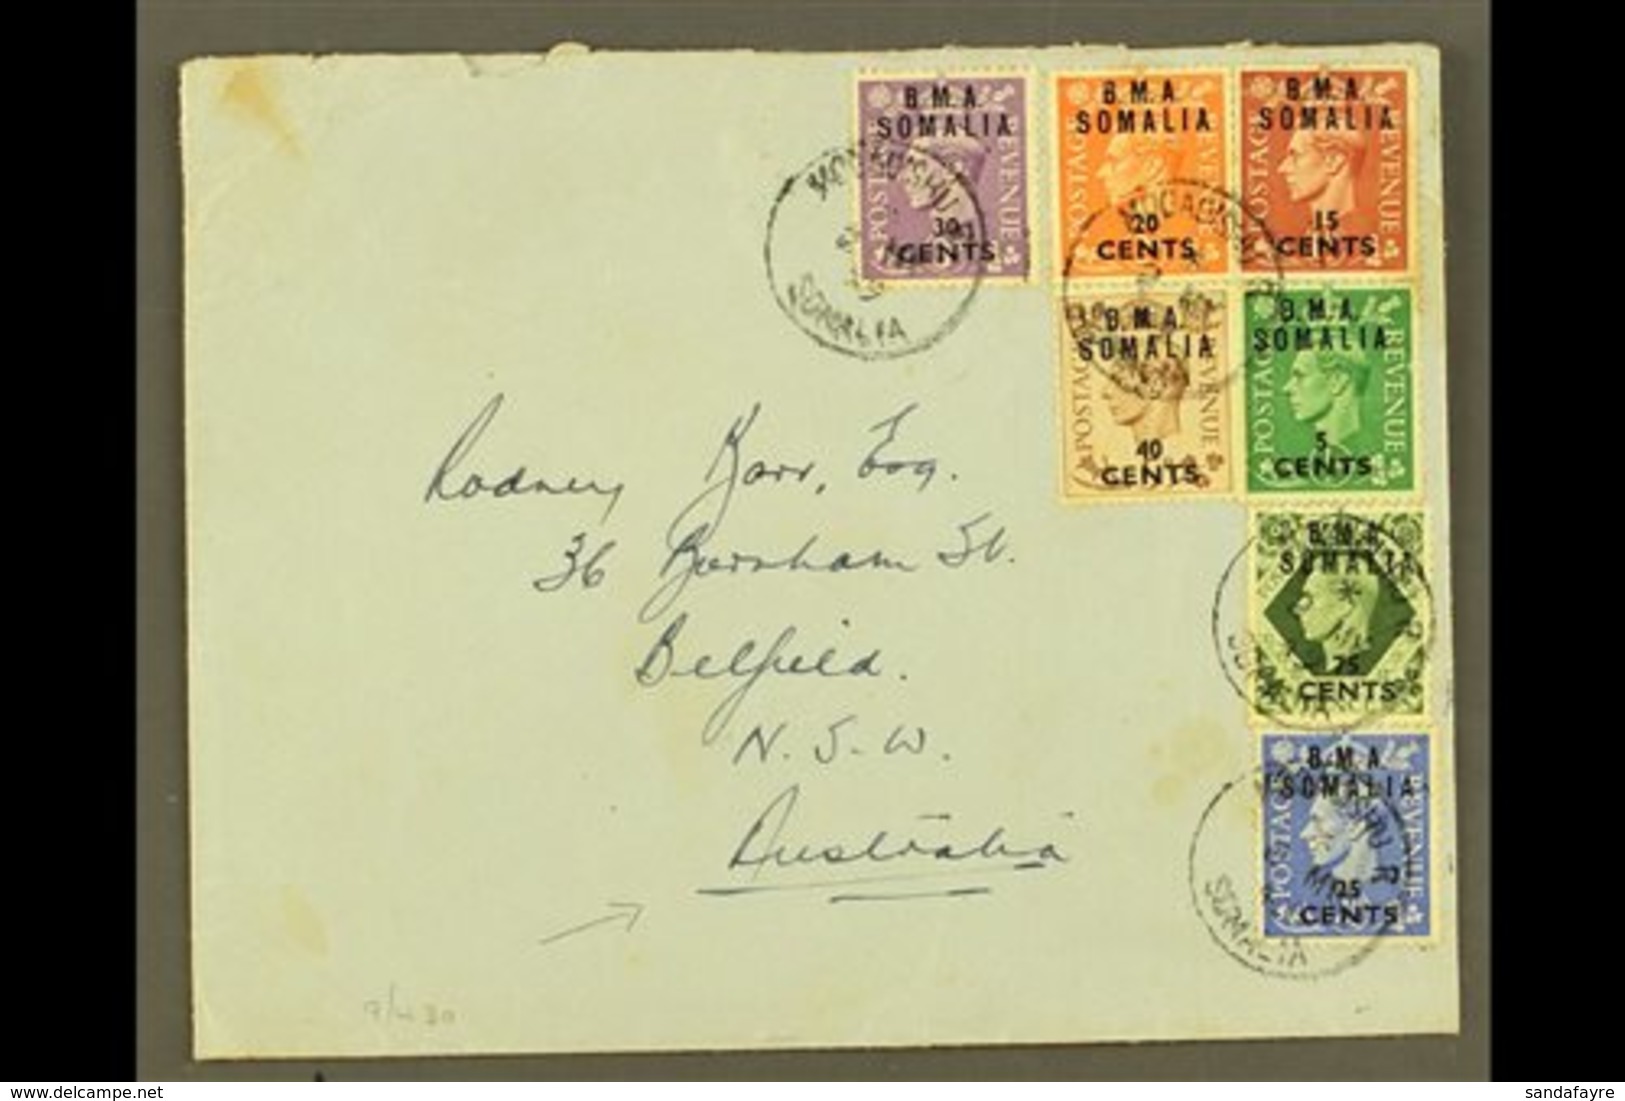 SOMALIA  1949 Plain Envelope To Australia, Franked KGVI 5c On ½d To 40c On 5d & 75c On 9d "B.M.A. SOMALIA" Ovpts, SG S10 - Italiaans Oost-Afrika